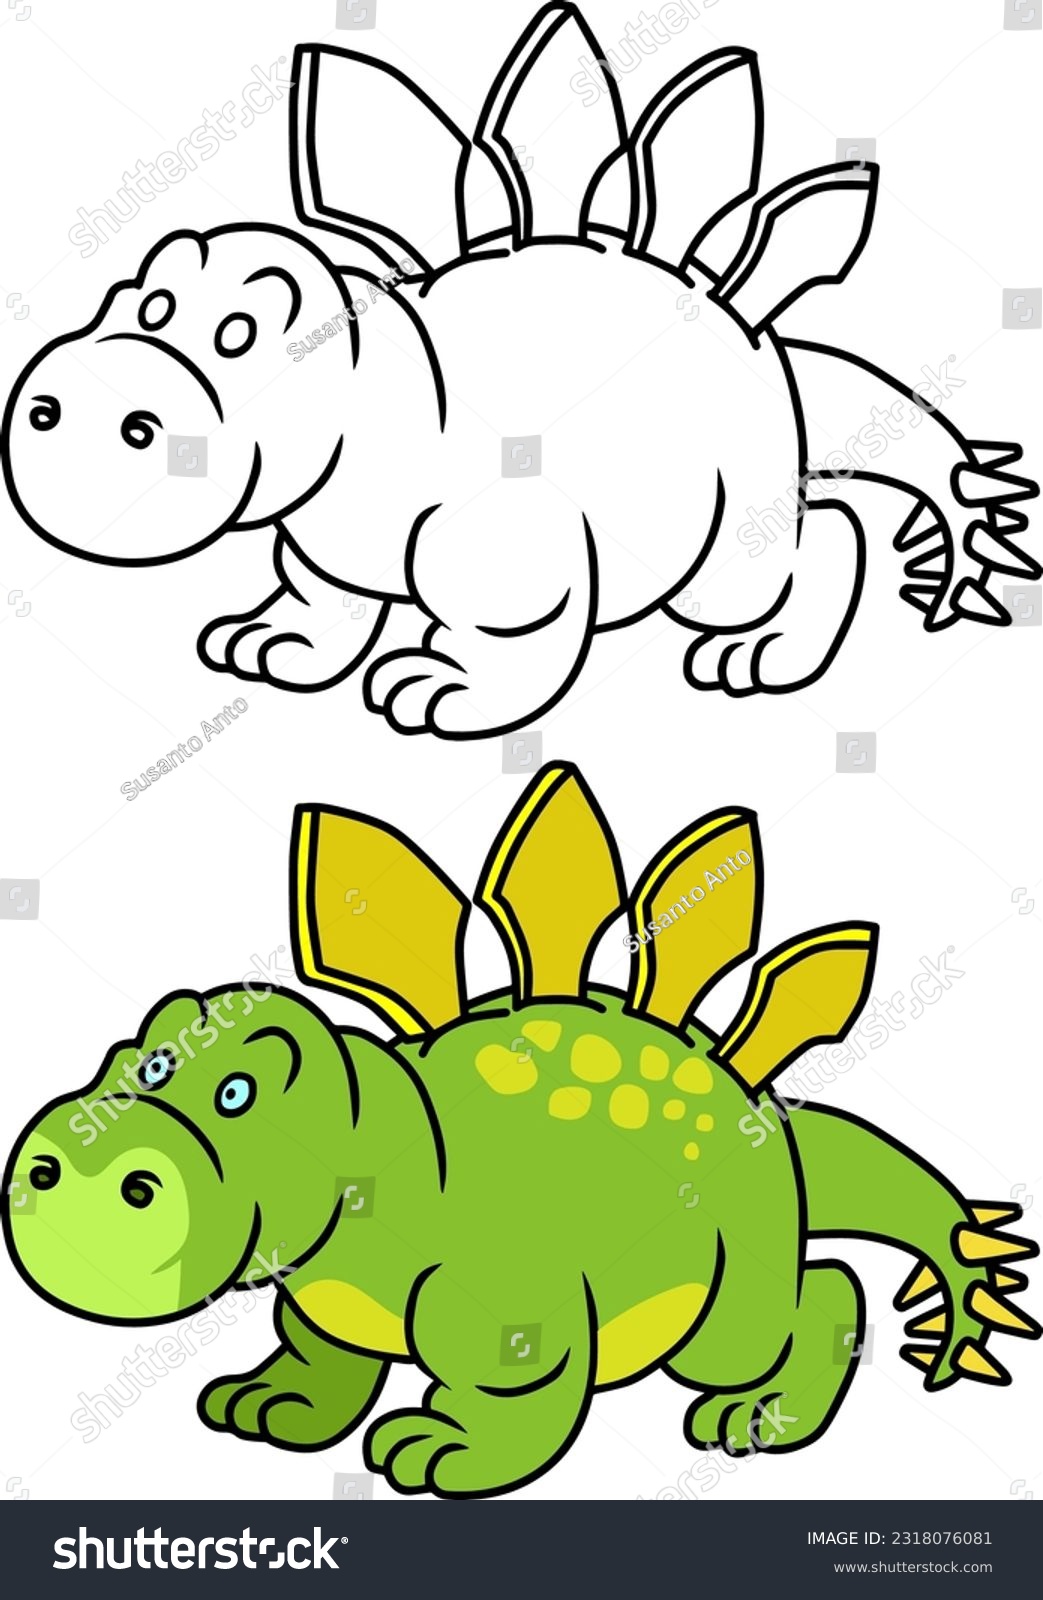 SVG of stegosaurus  vector illustration isolated on white background svg